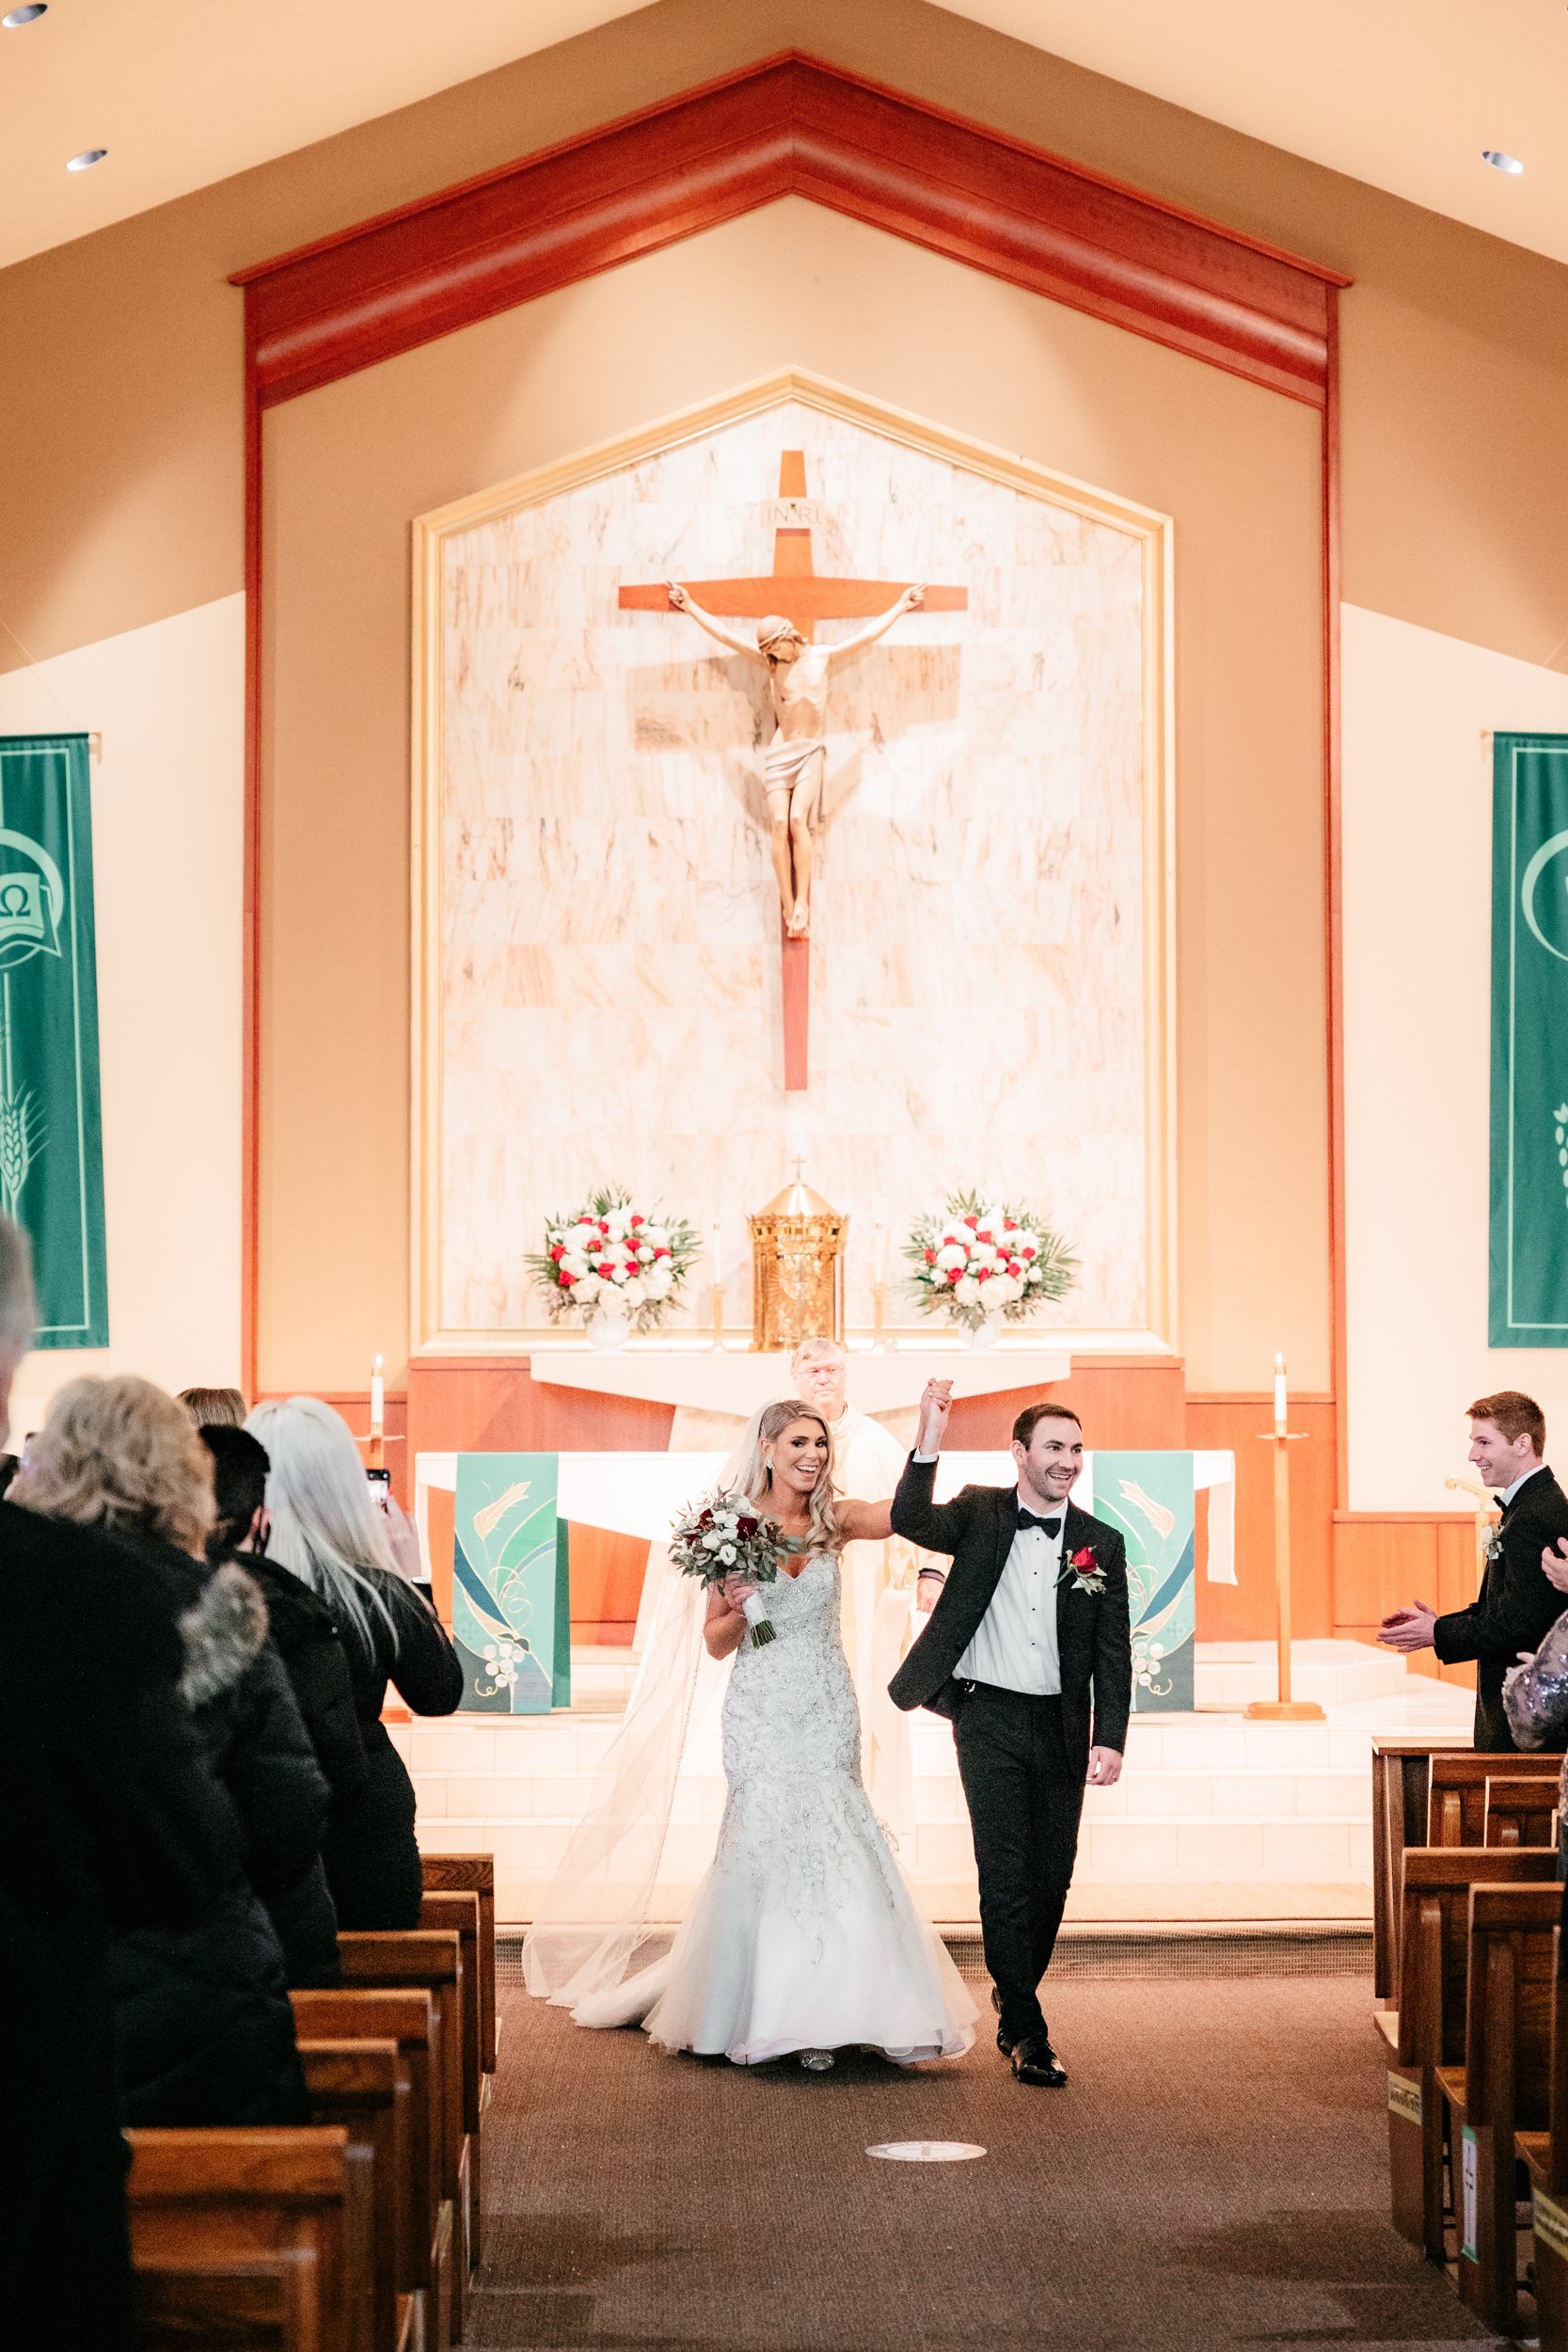 LUCEINS MANOR WEDDING PHOTOGRAPHY - FEB 2021 - 52.jpg